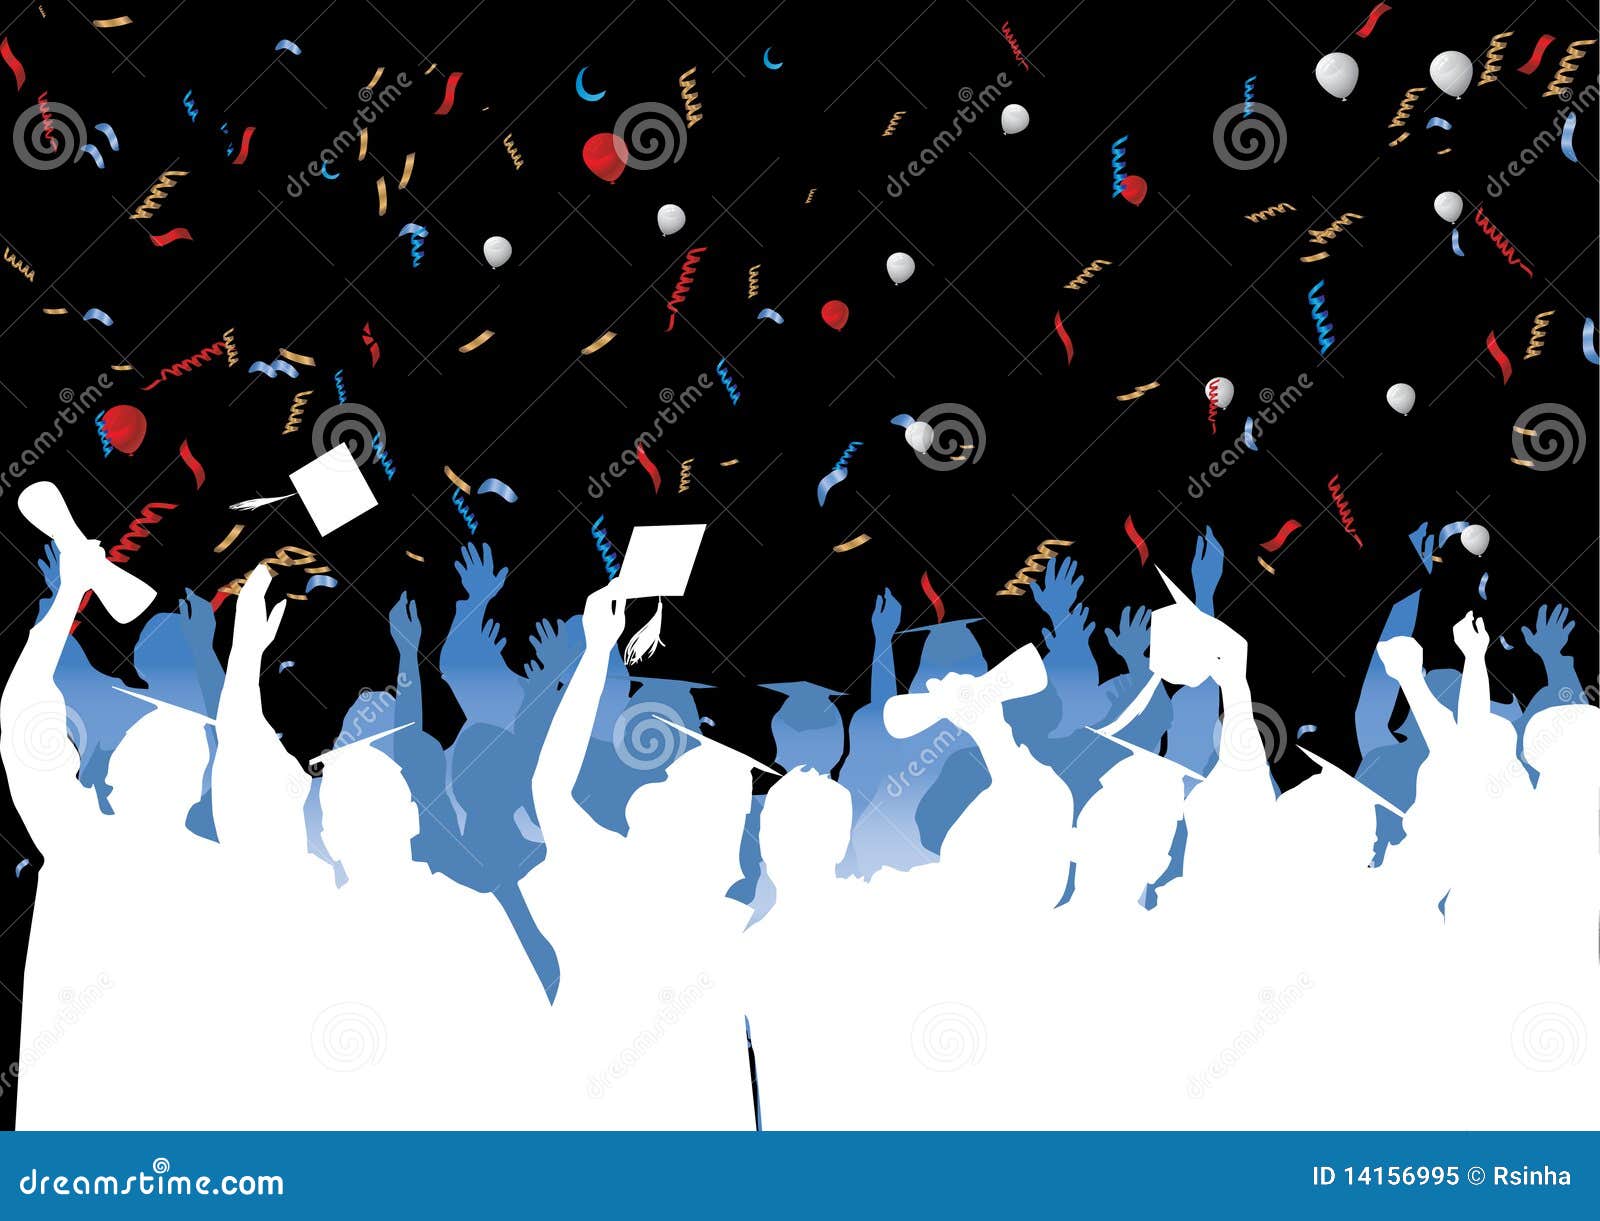 graduation celebration in silhouette